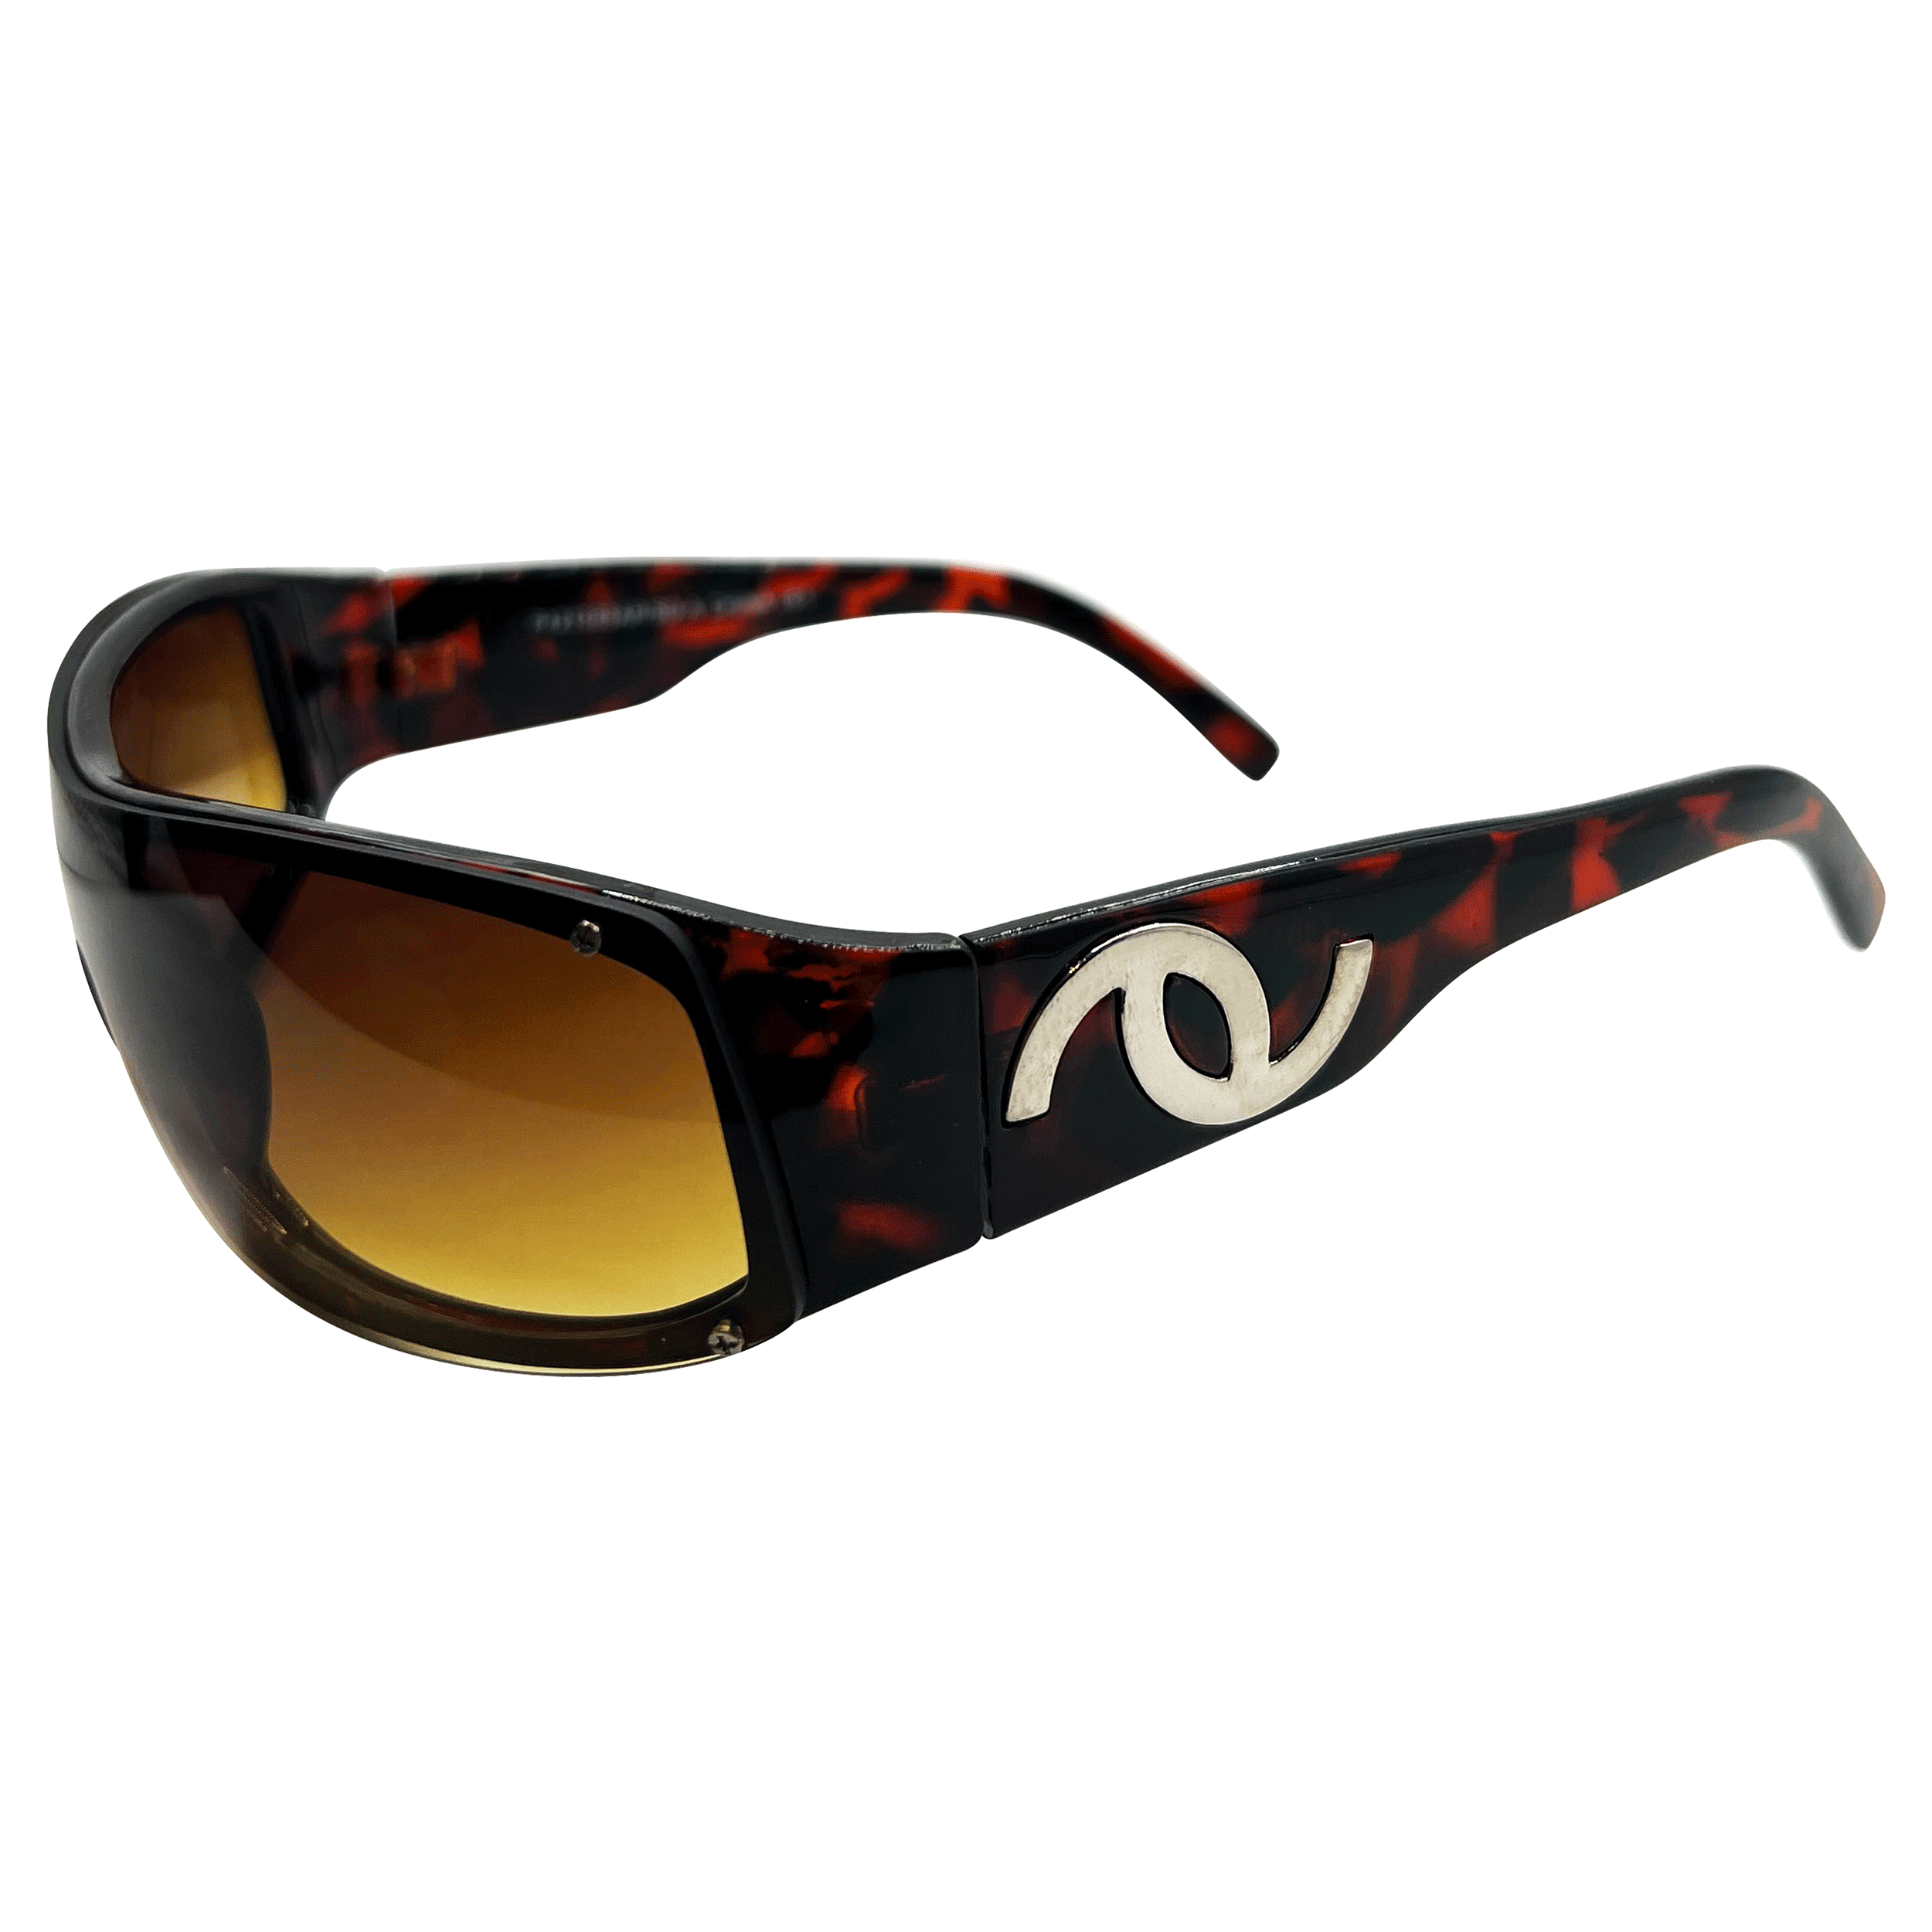 GONZALEZ Tortoise/Amber Sports Sunglasses